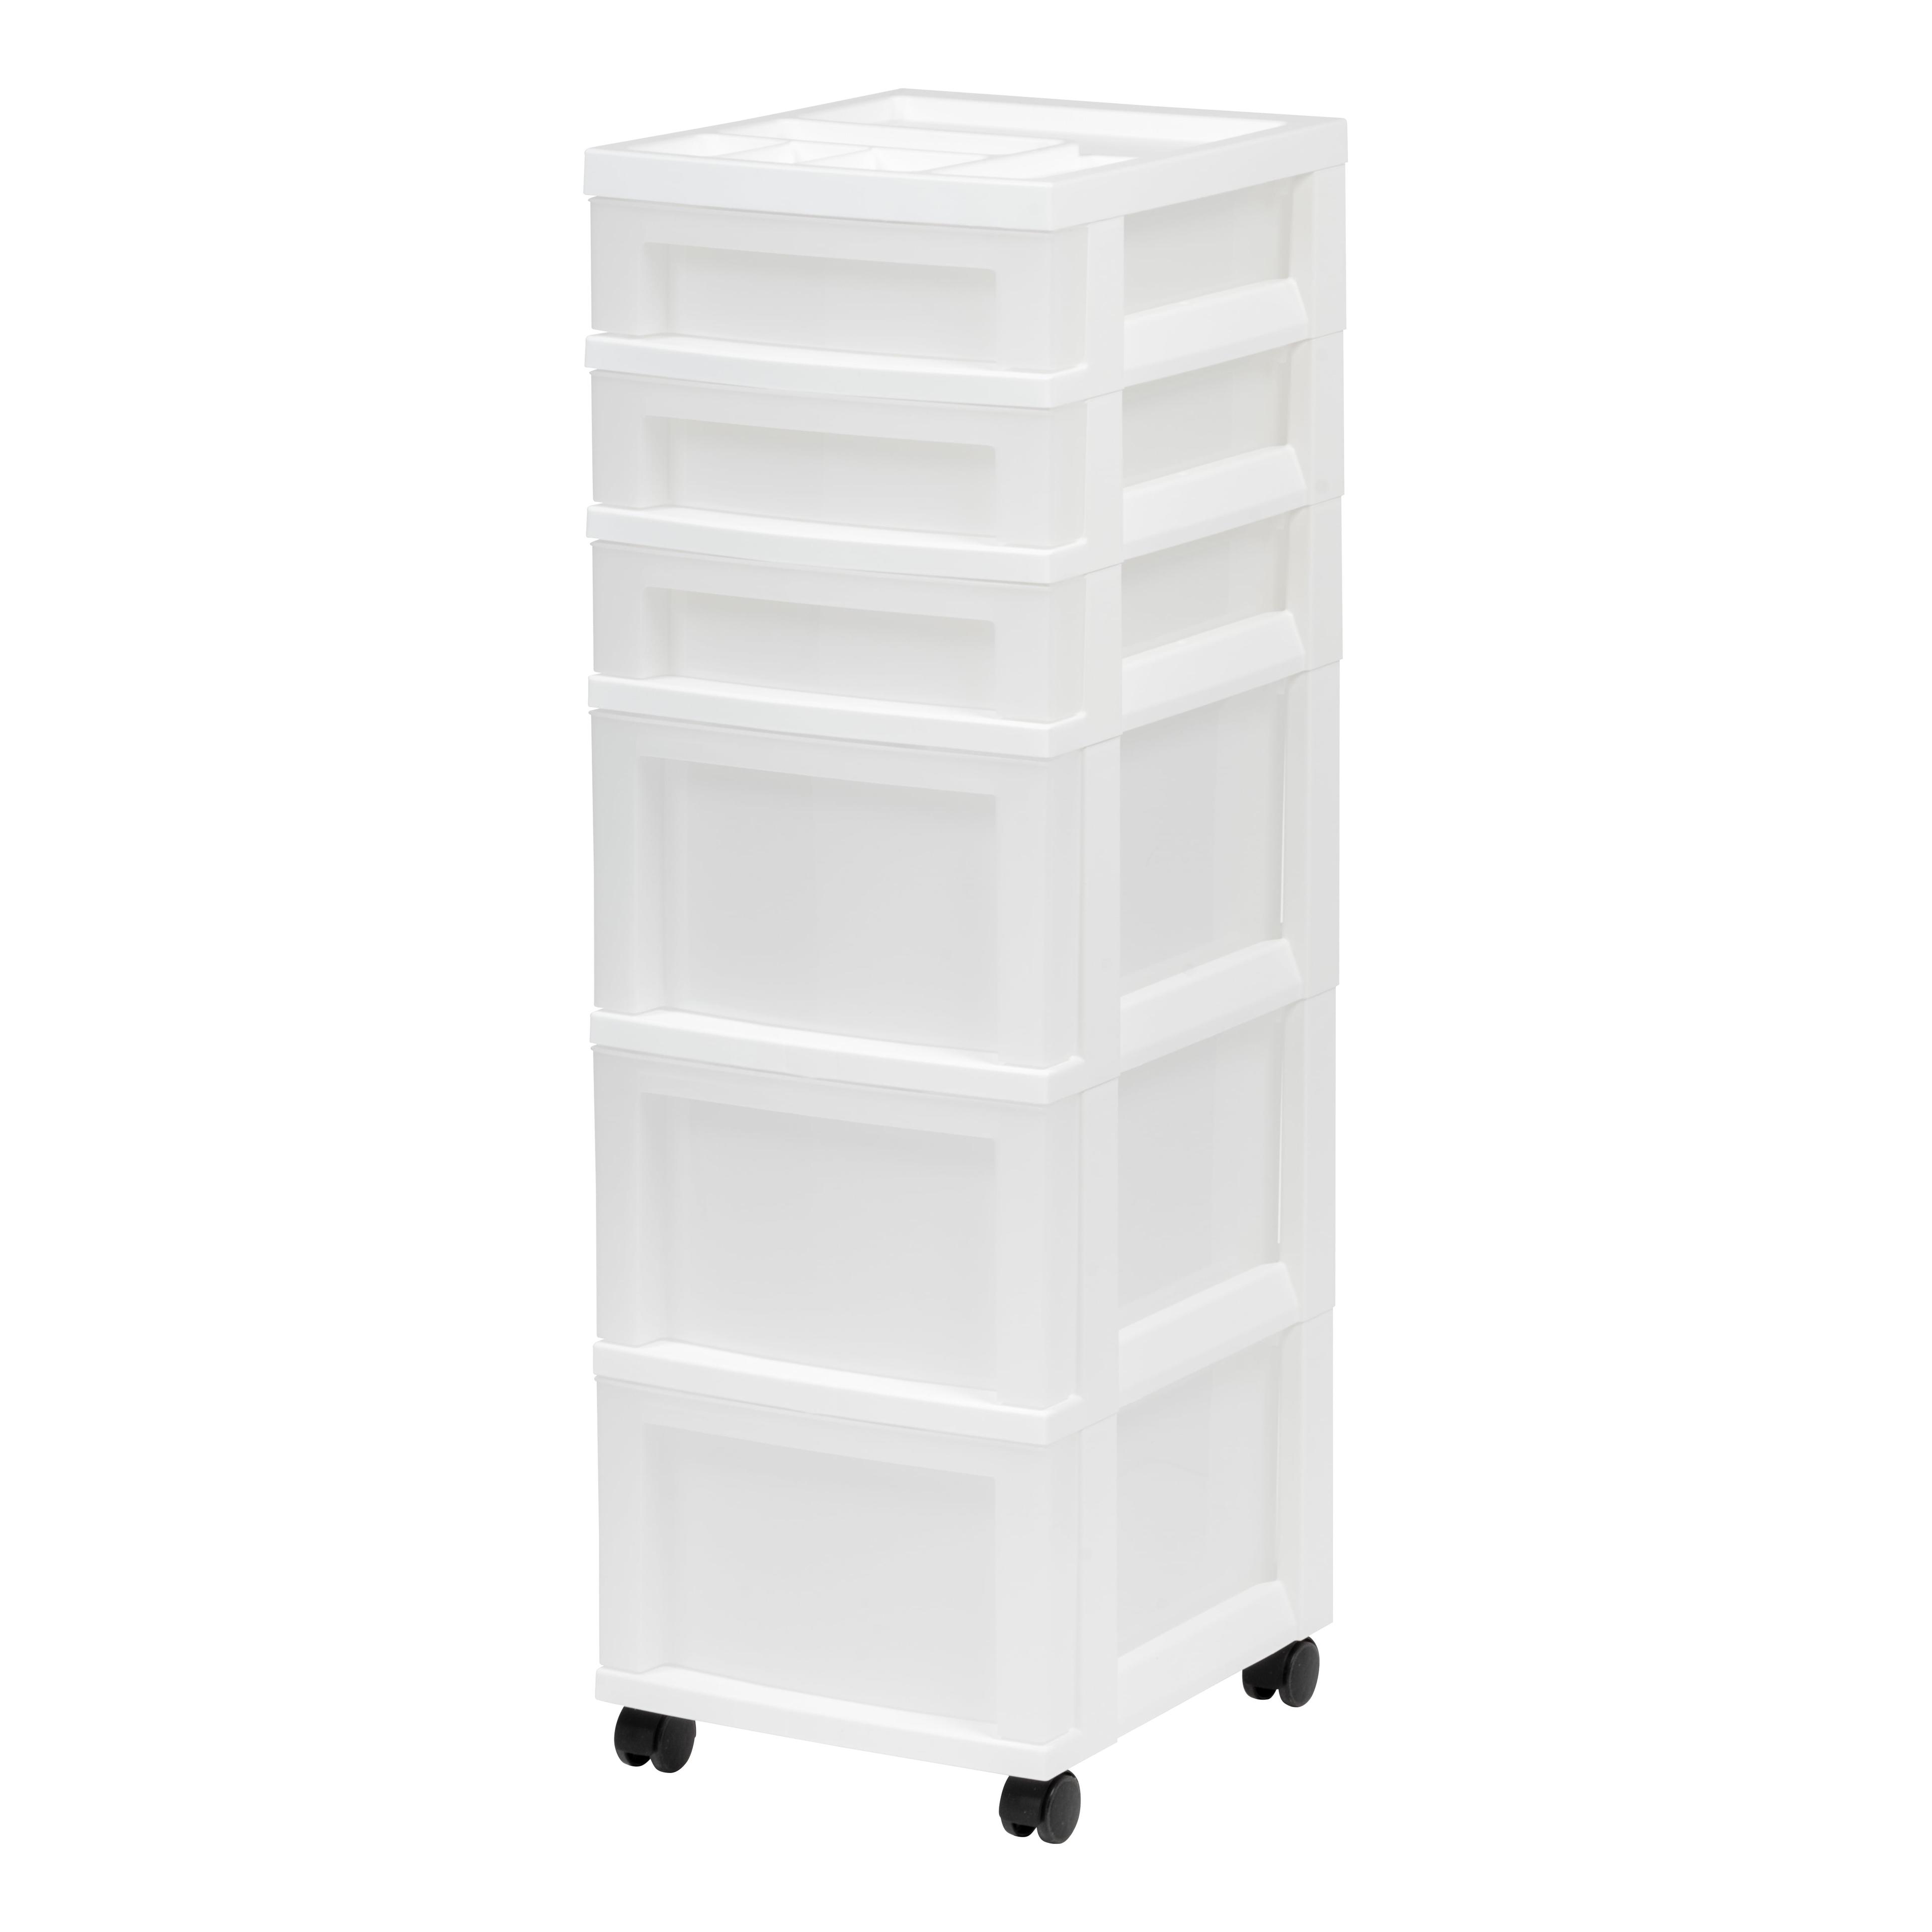 Iris White 6-Drawer Storage Tower with Organizer Top and Wheels